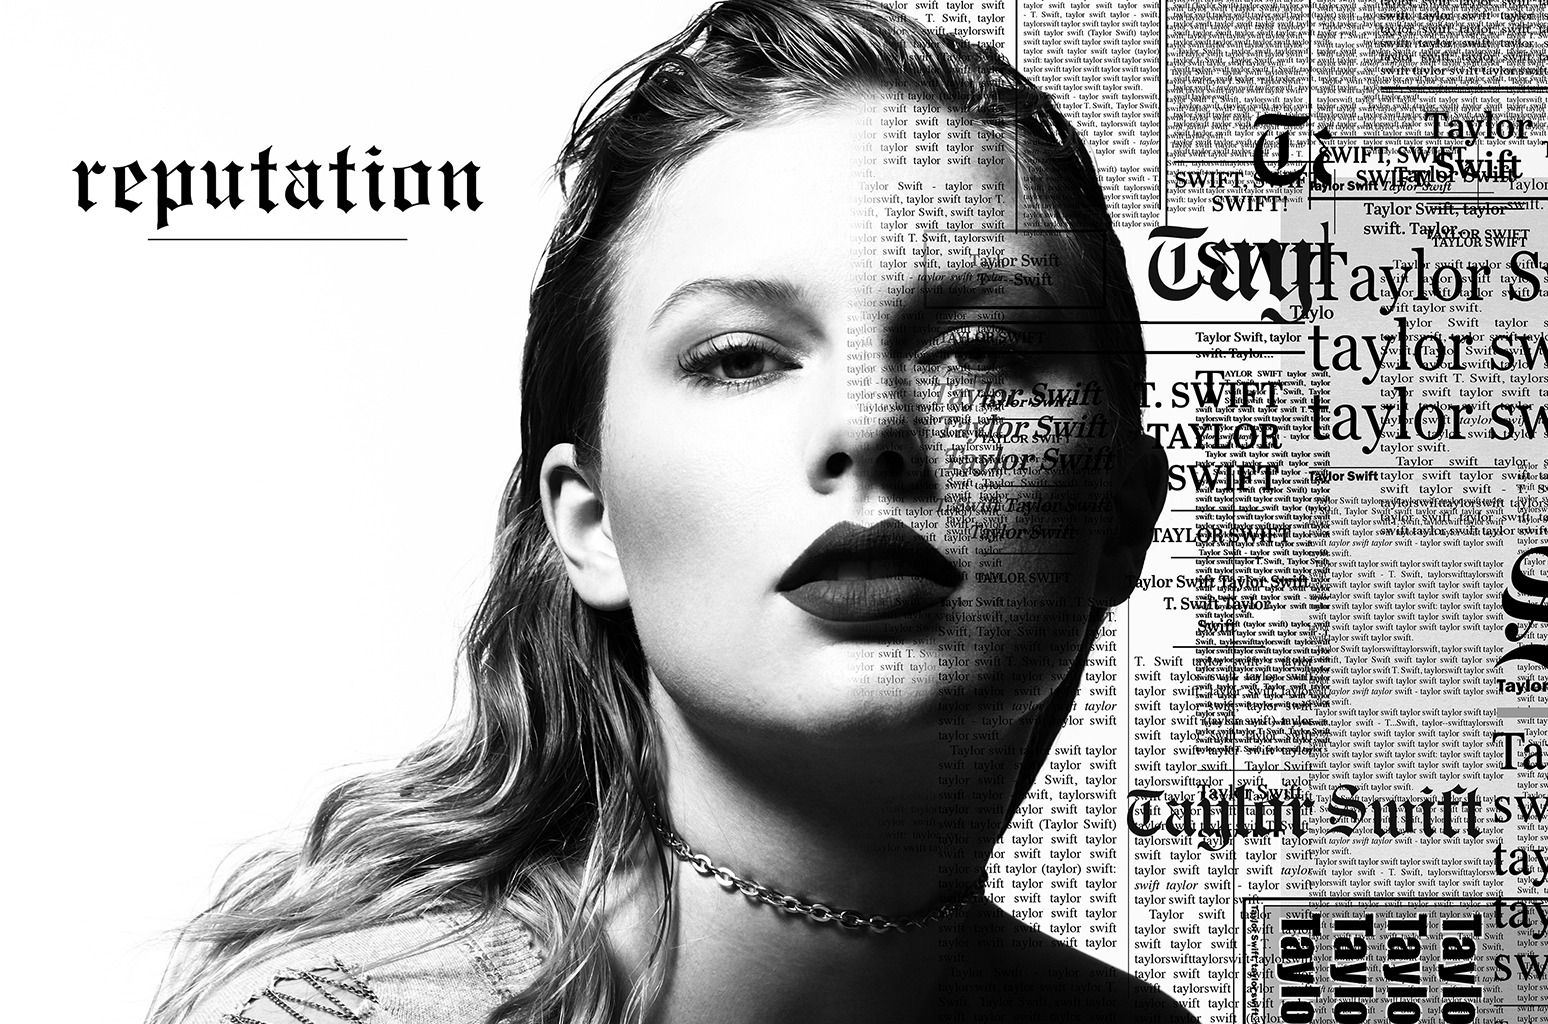 Taylor Swift's Reputation